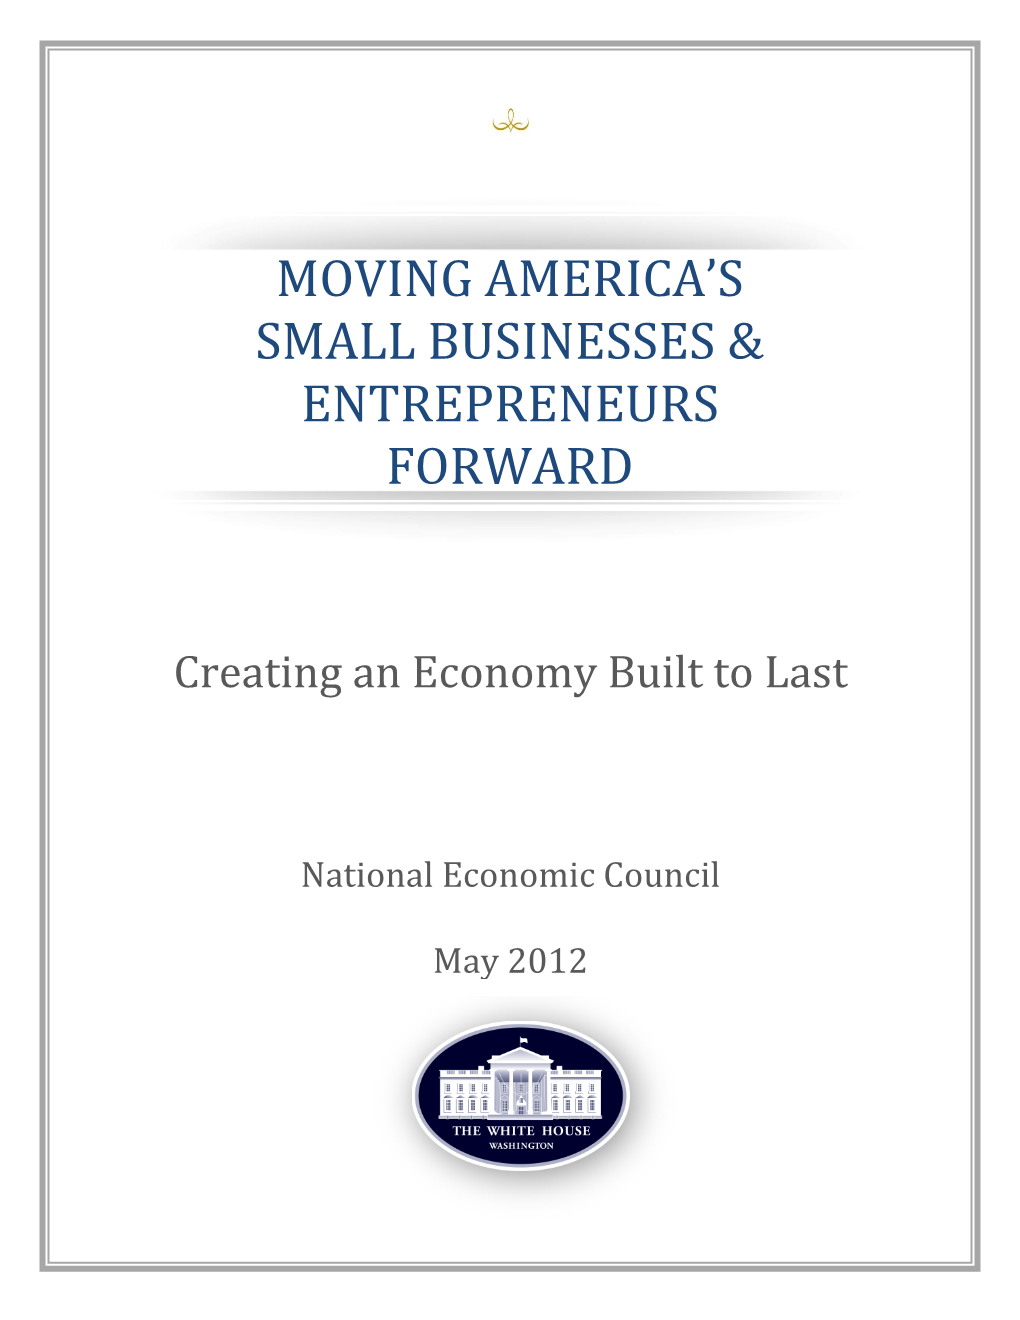 Moving America's Small Businesses & Entrepreneurs Forward